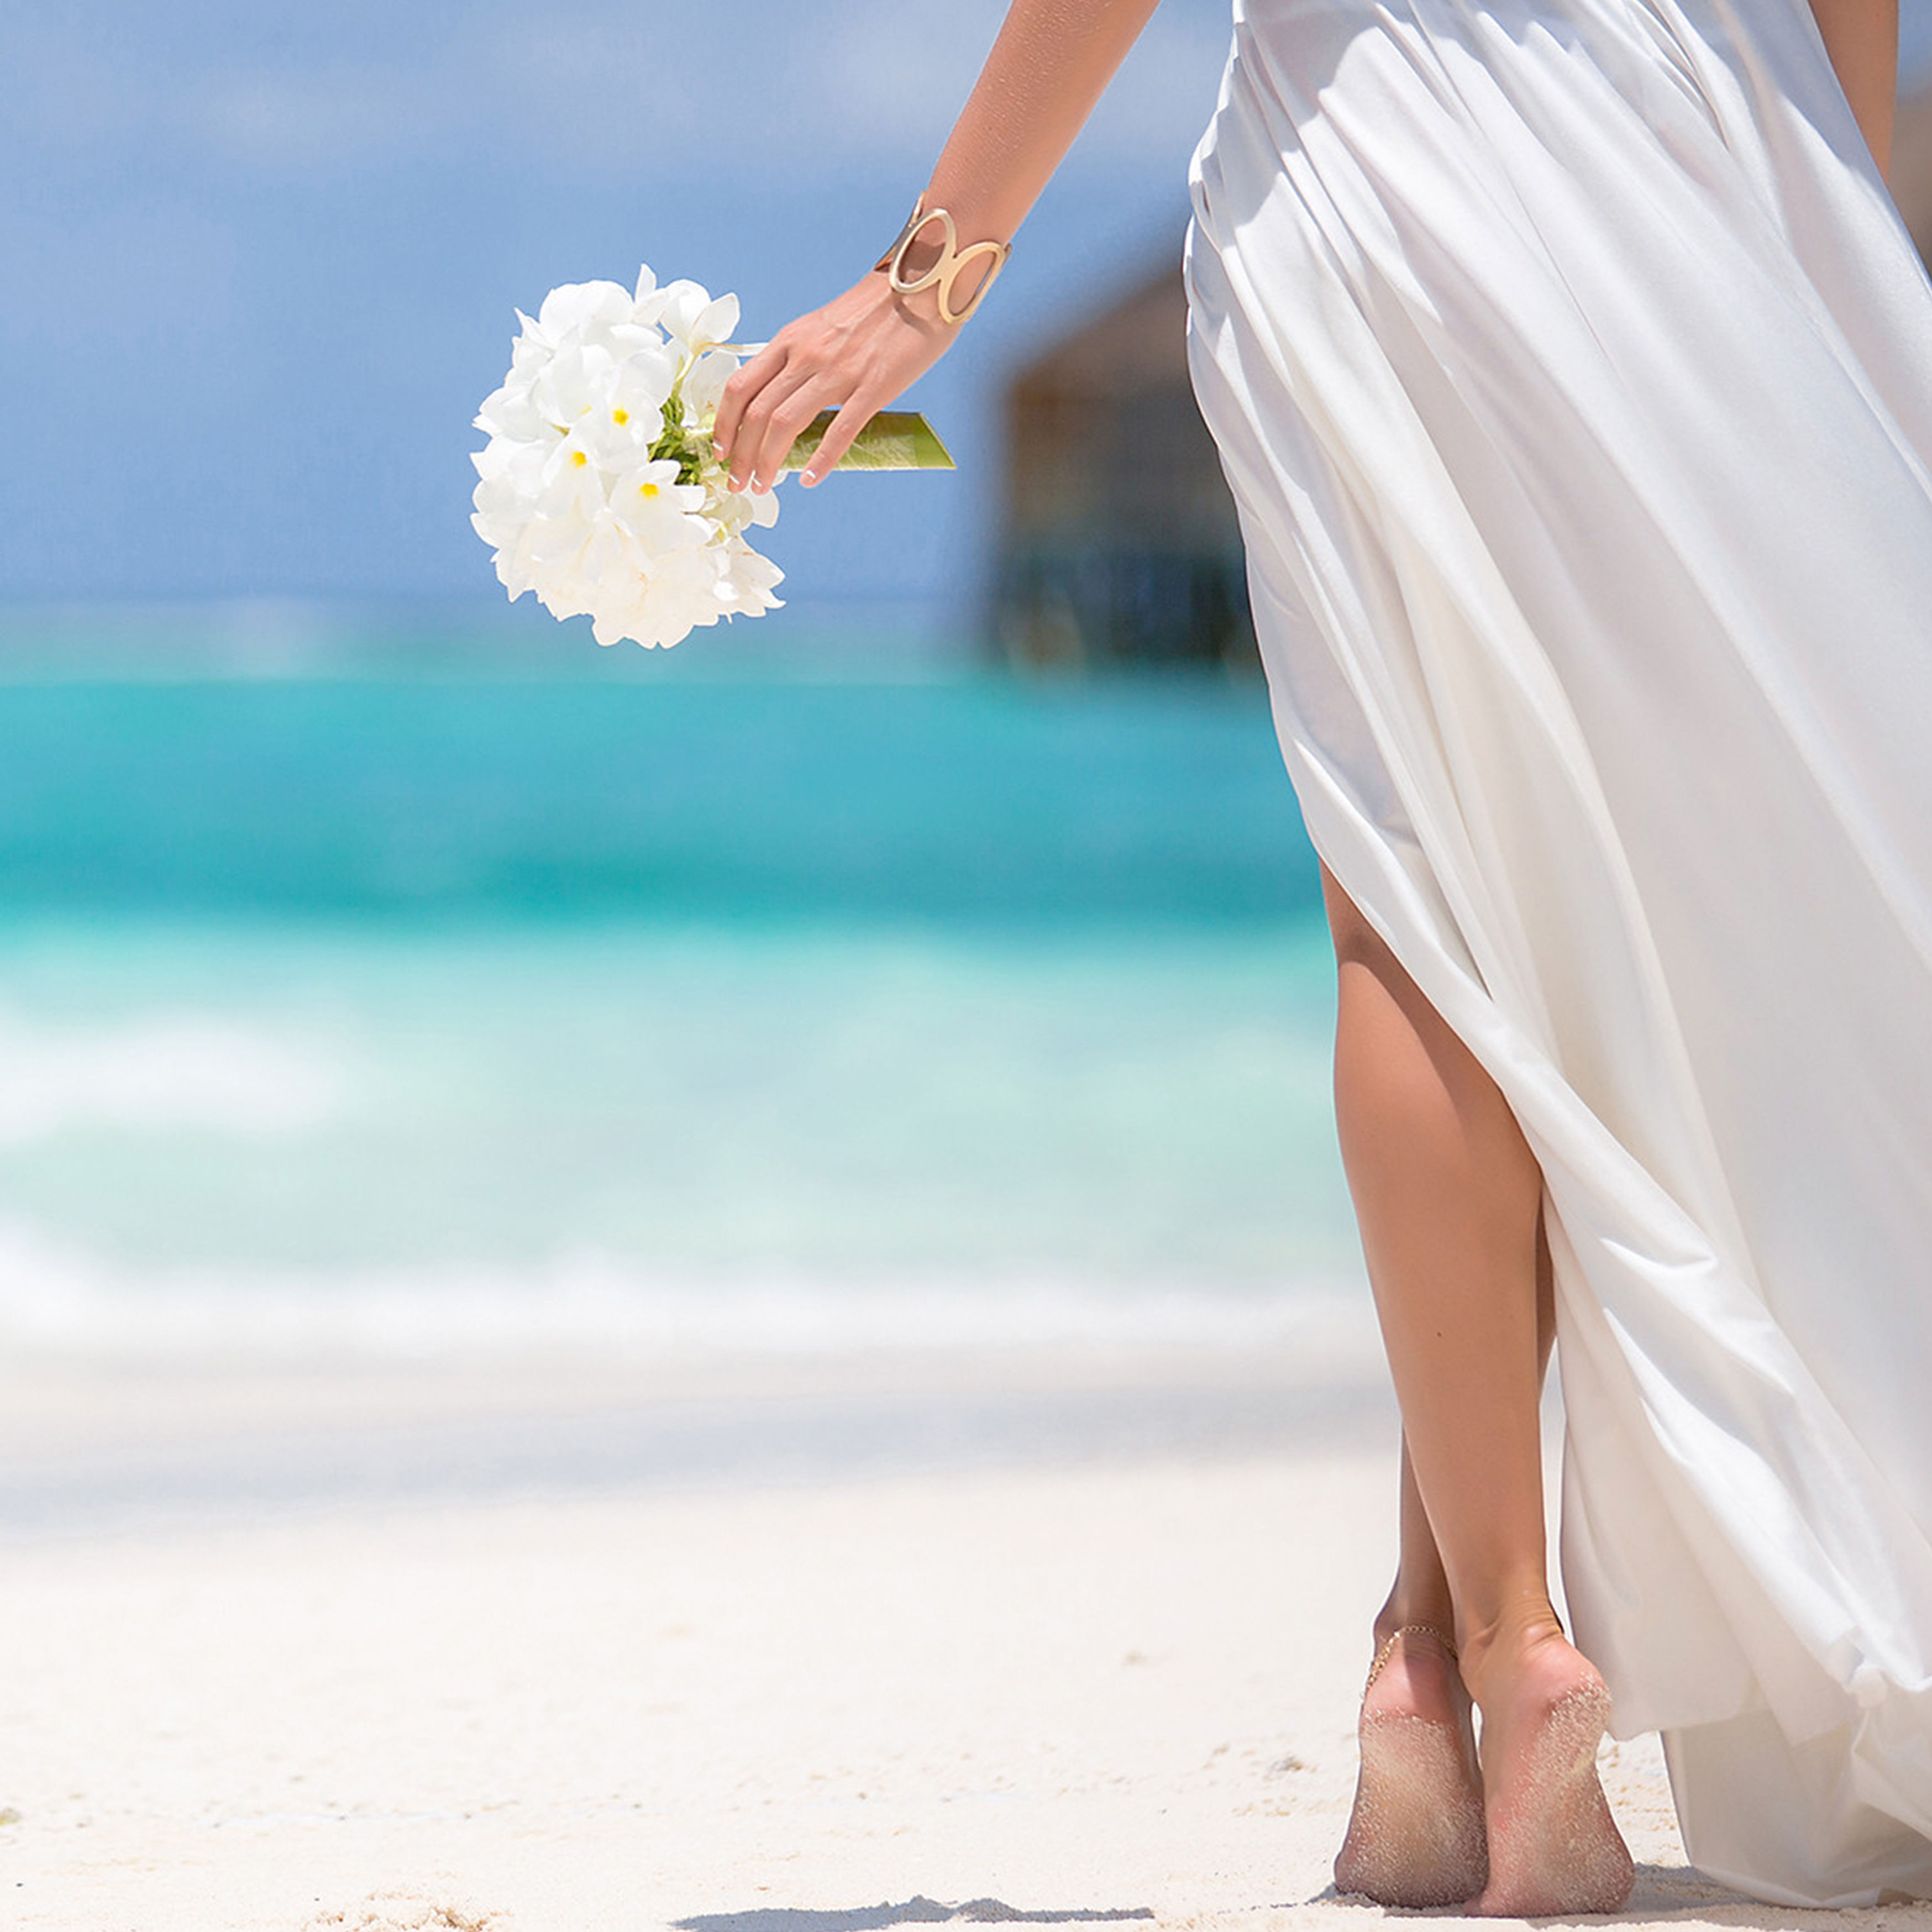 Bride with bouquet walking along beach